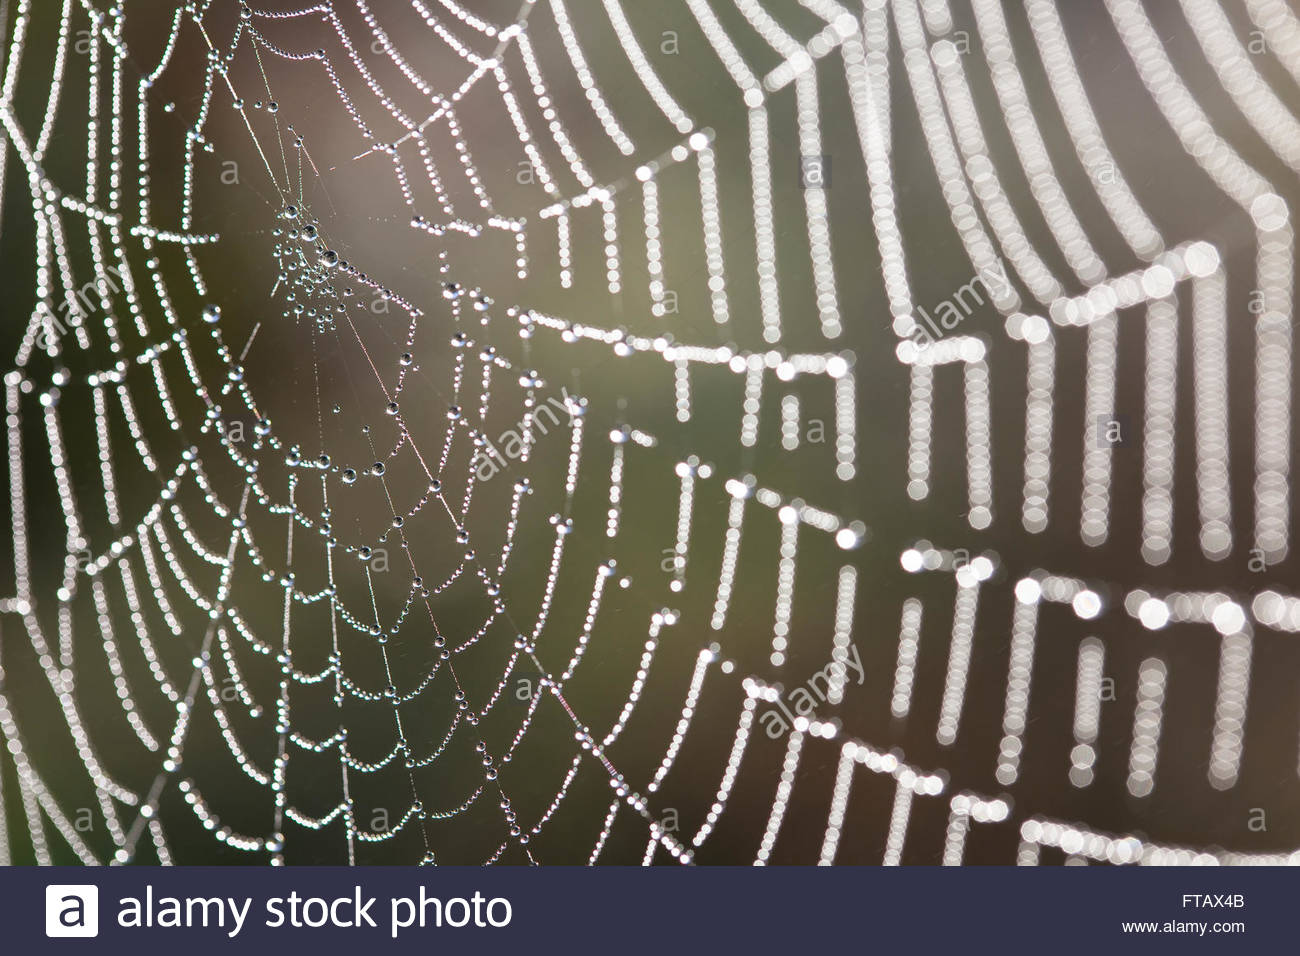 Webs patterns